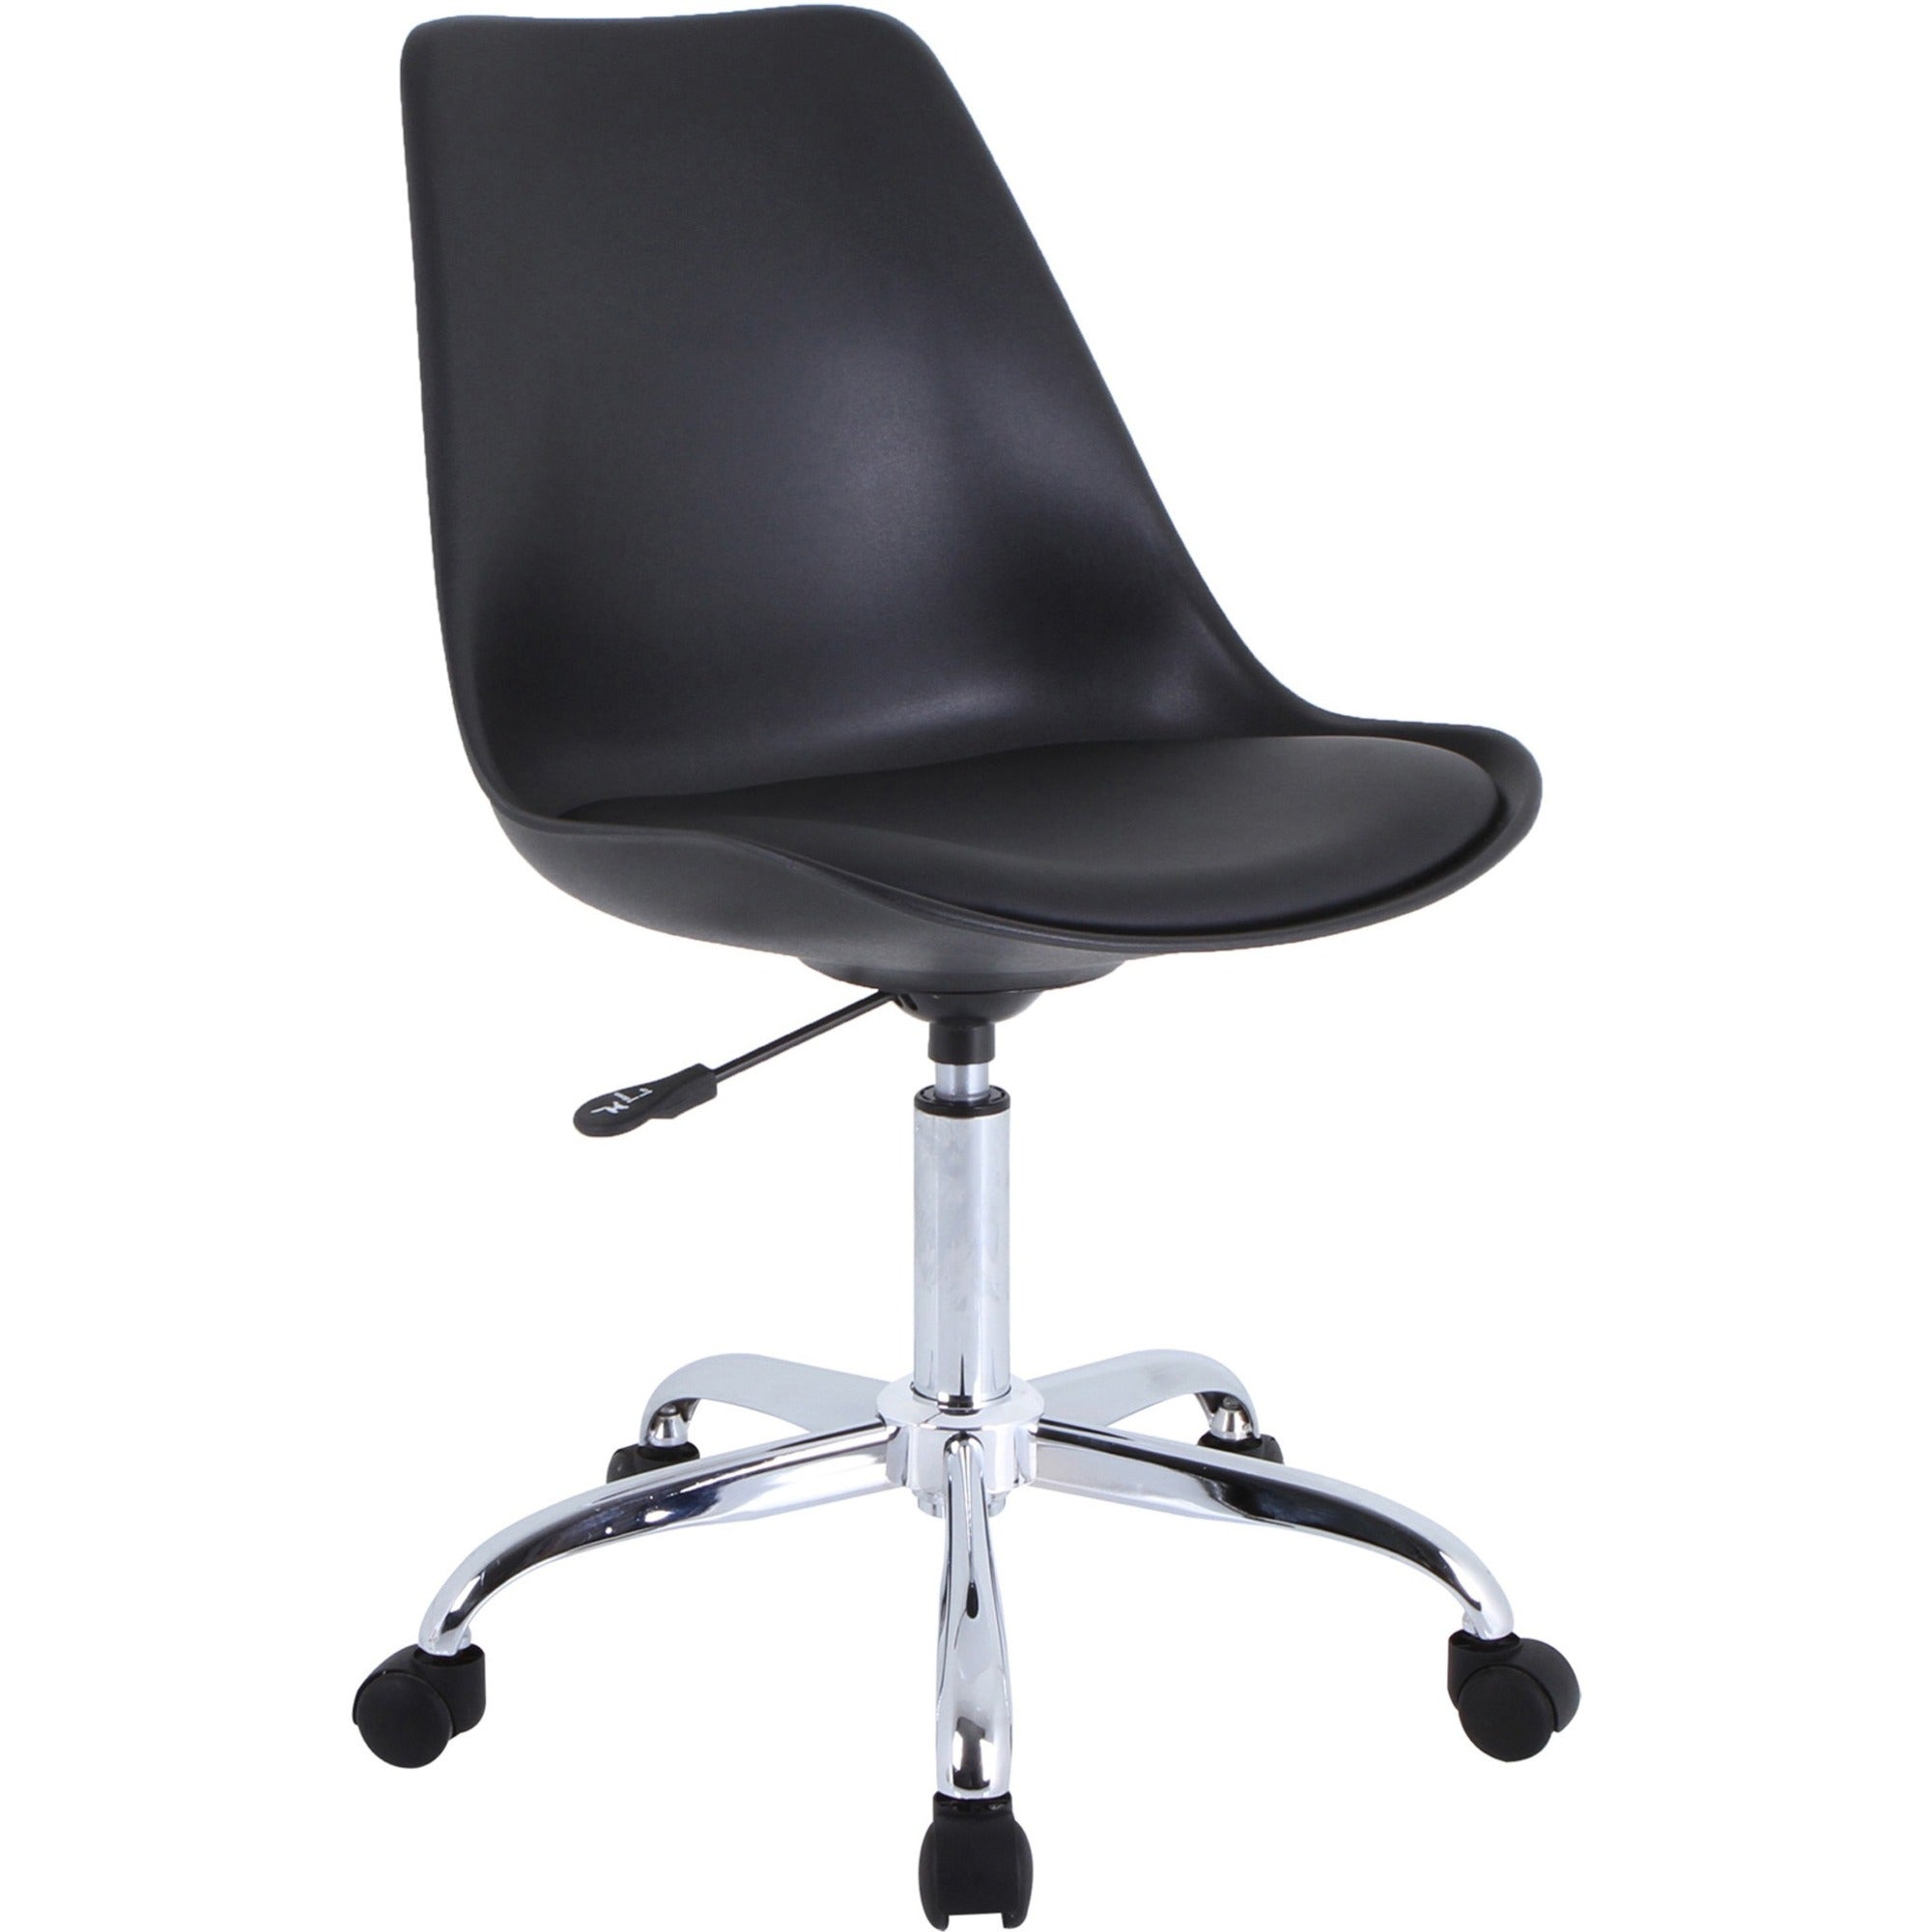 nusparc-padded-seat-poly-task-chair-poly-seat-high-back-5-star-base-black-polyvinyl-chloride-pvc-plastic-polyurethane-1-each_nprch303cnbk - 1